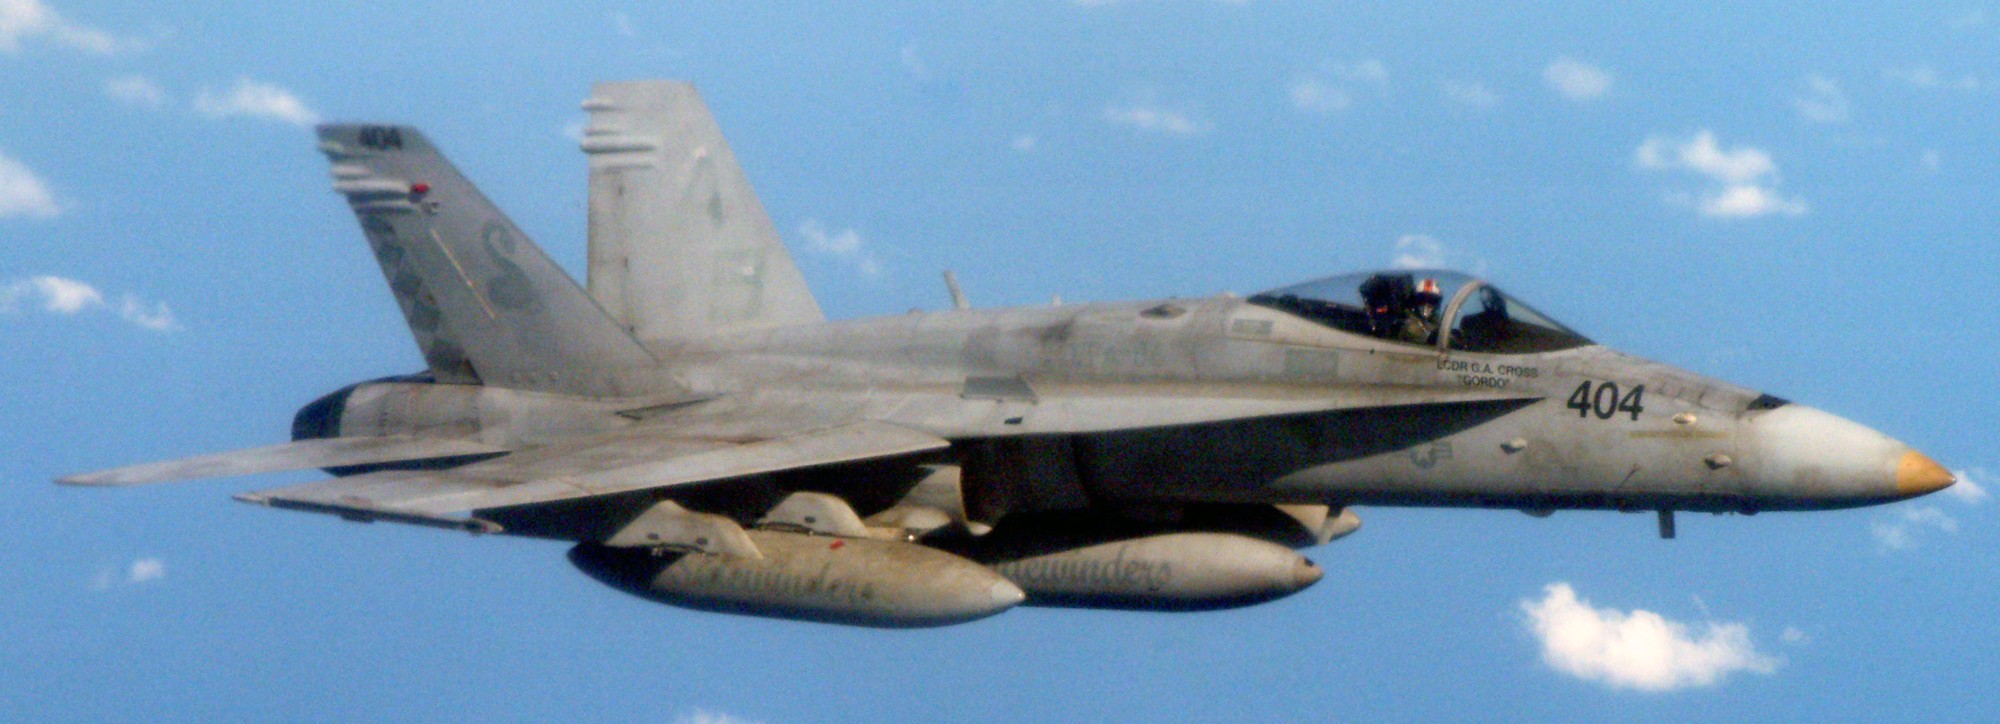 vfa-86 sidewinders strike fighter squadron f/a-18c hornet cvw-1 uss enterprise cvn-65 navy 108p